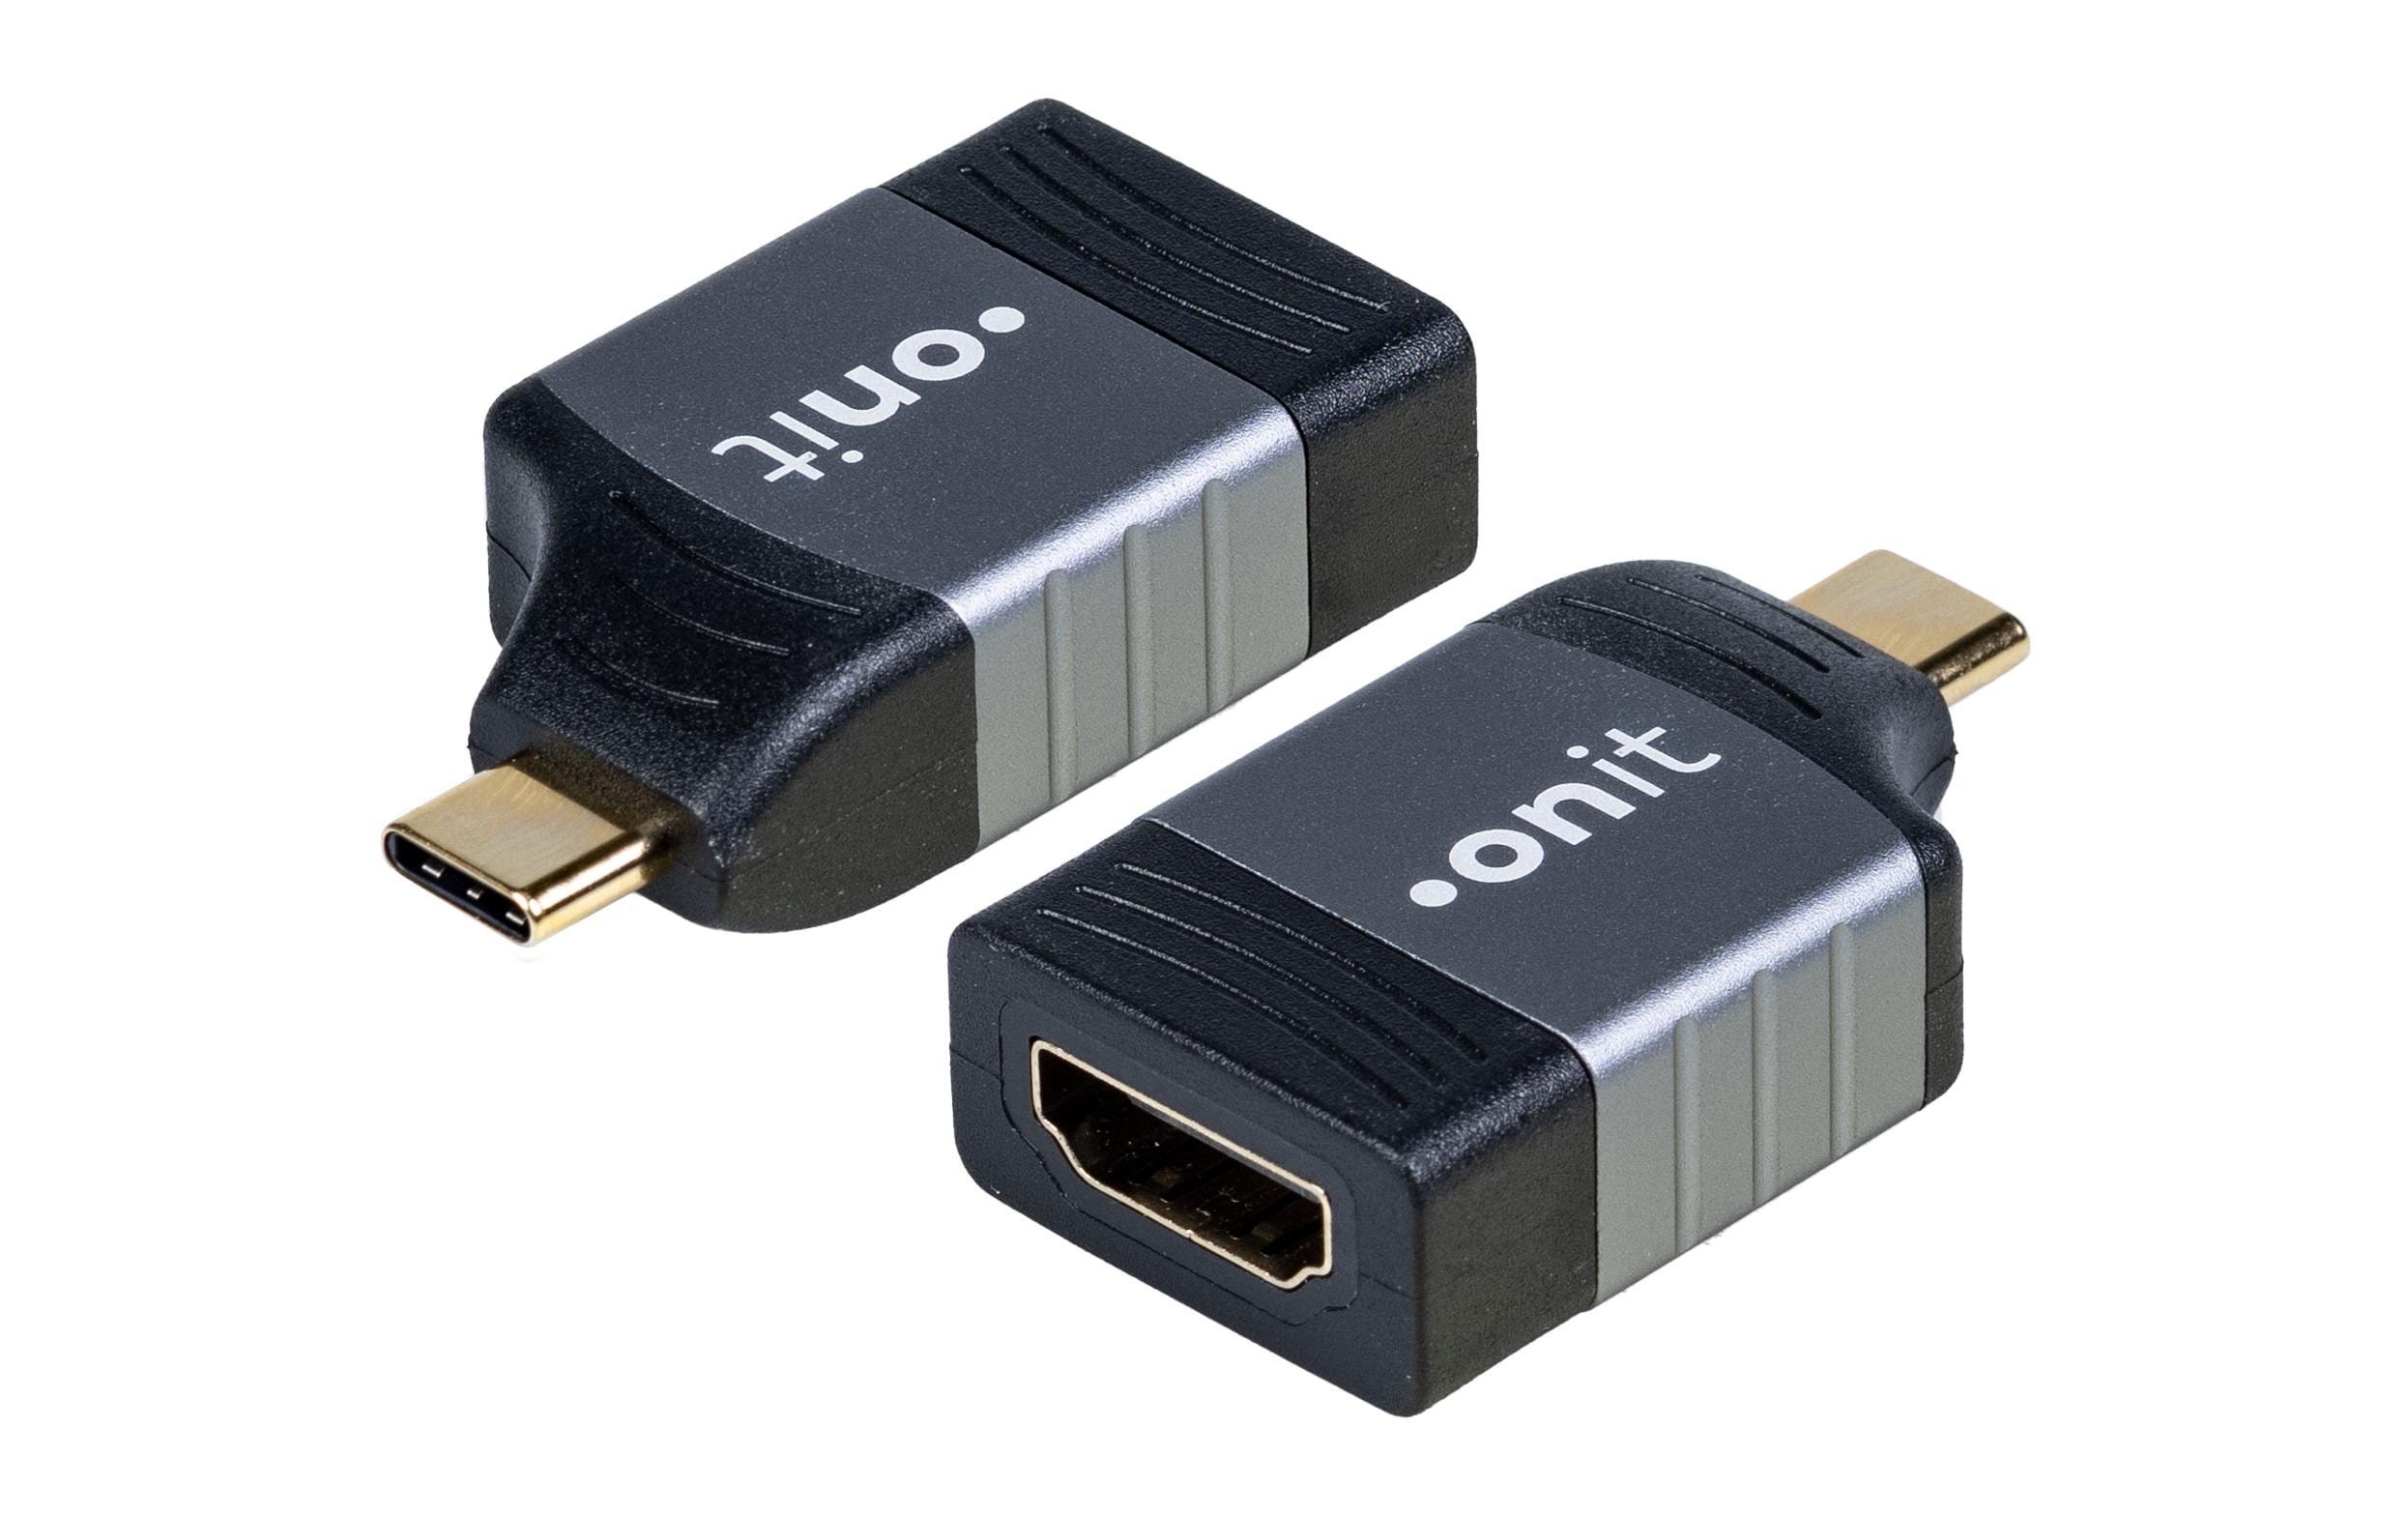 onit Adapter USB Type-C - HDMI, 1 Stück